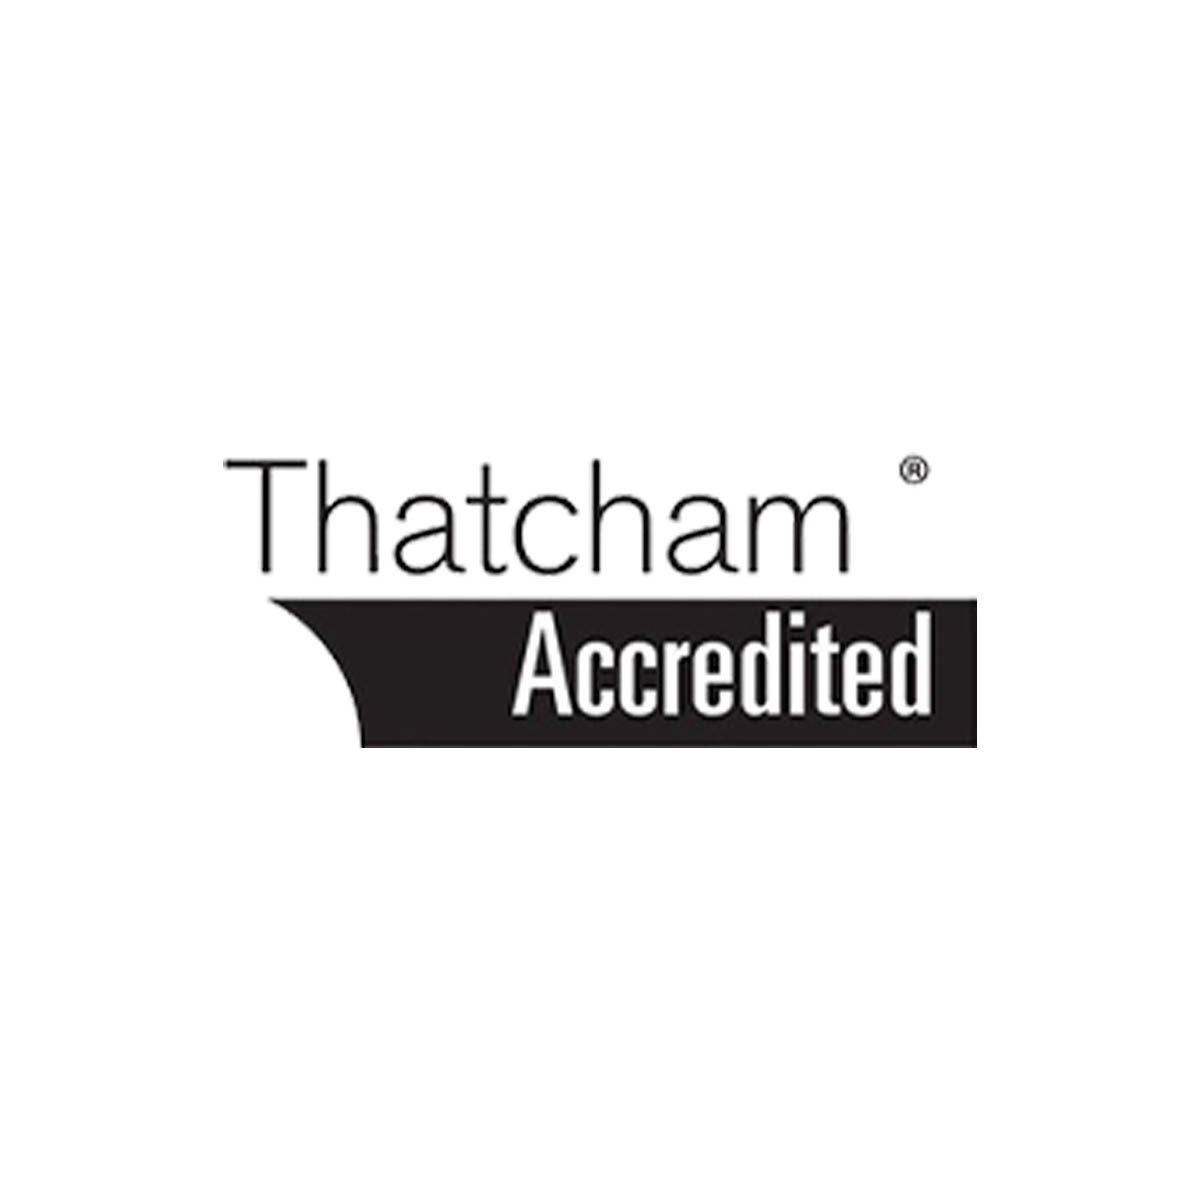 s7-thatcham-accredited